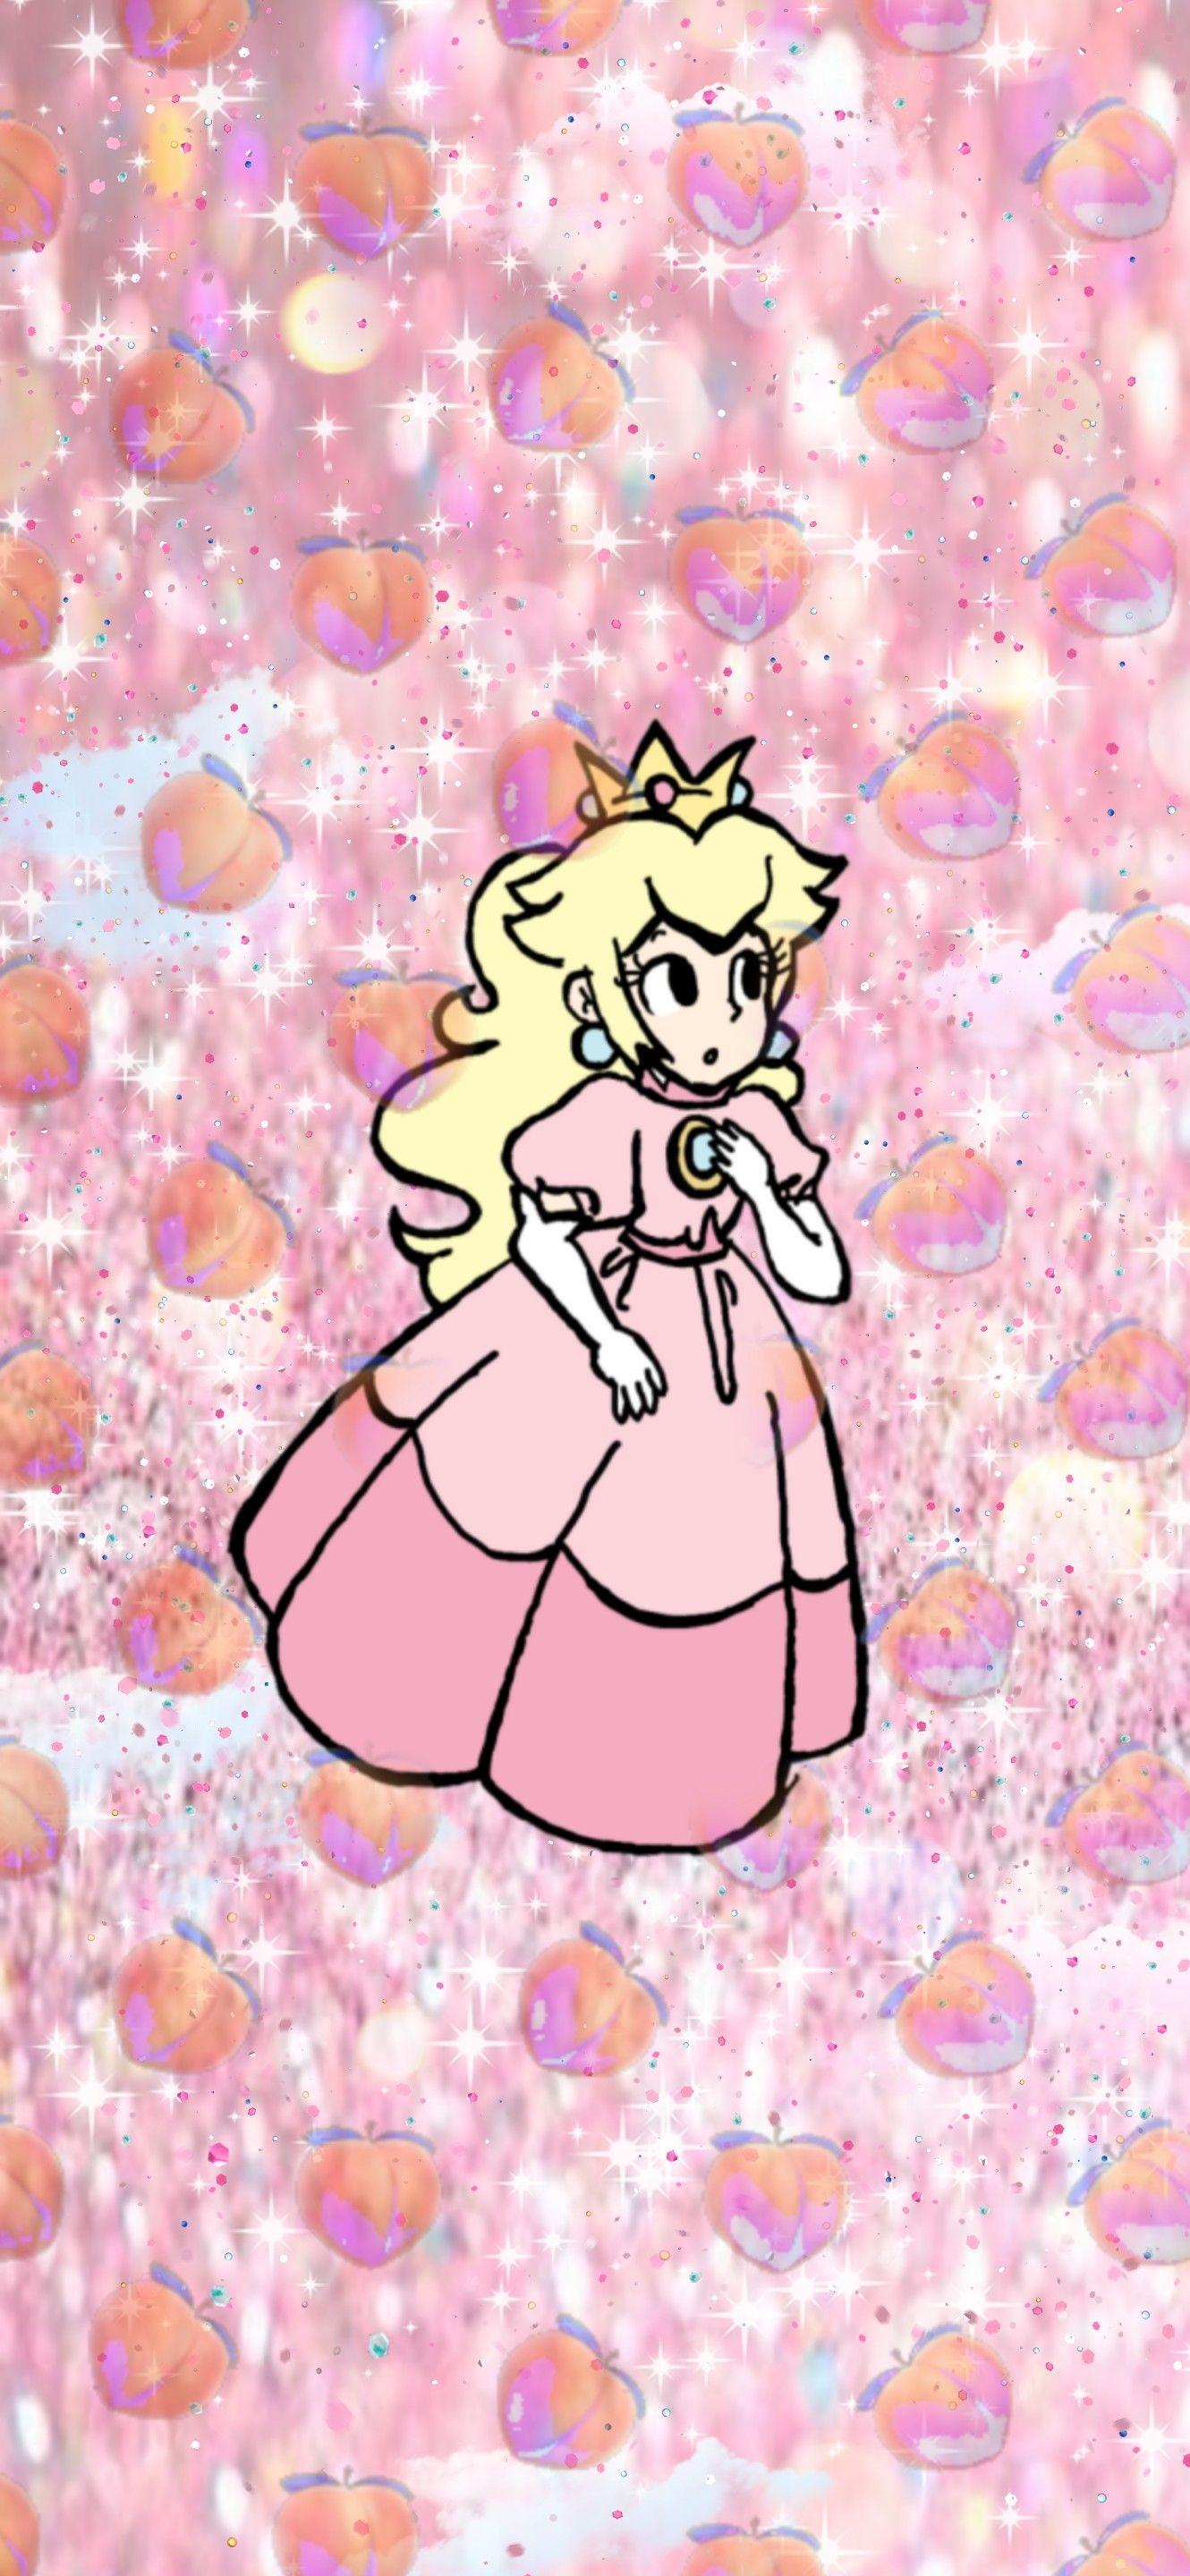 Princess Peach Phone Wallpapers - Top Free Princess Peach Phone ...